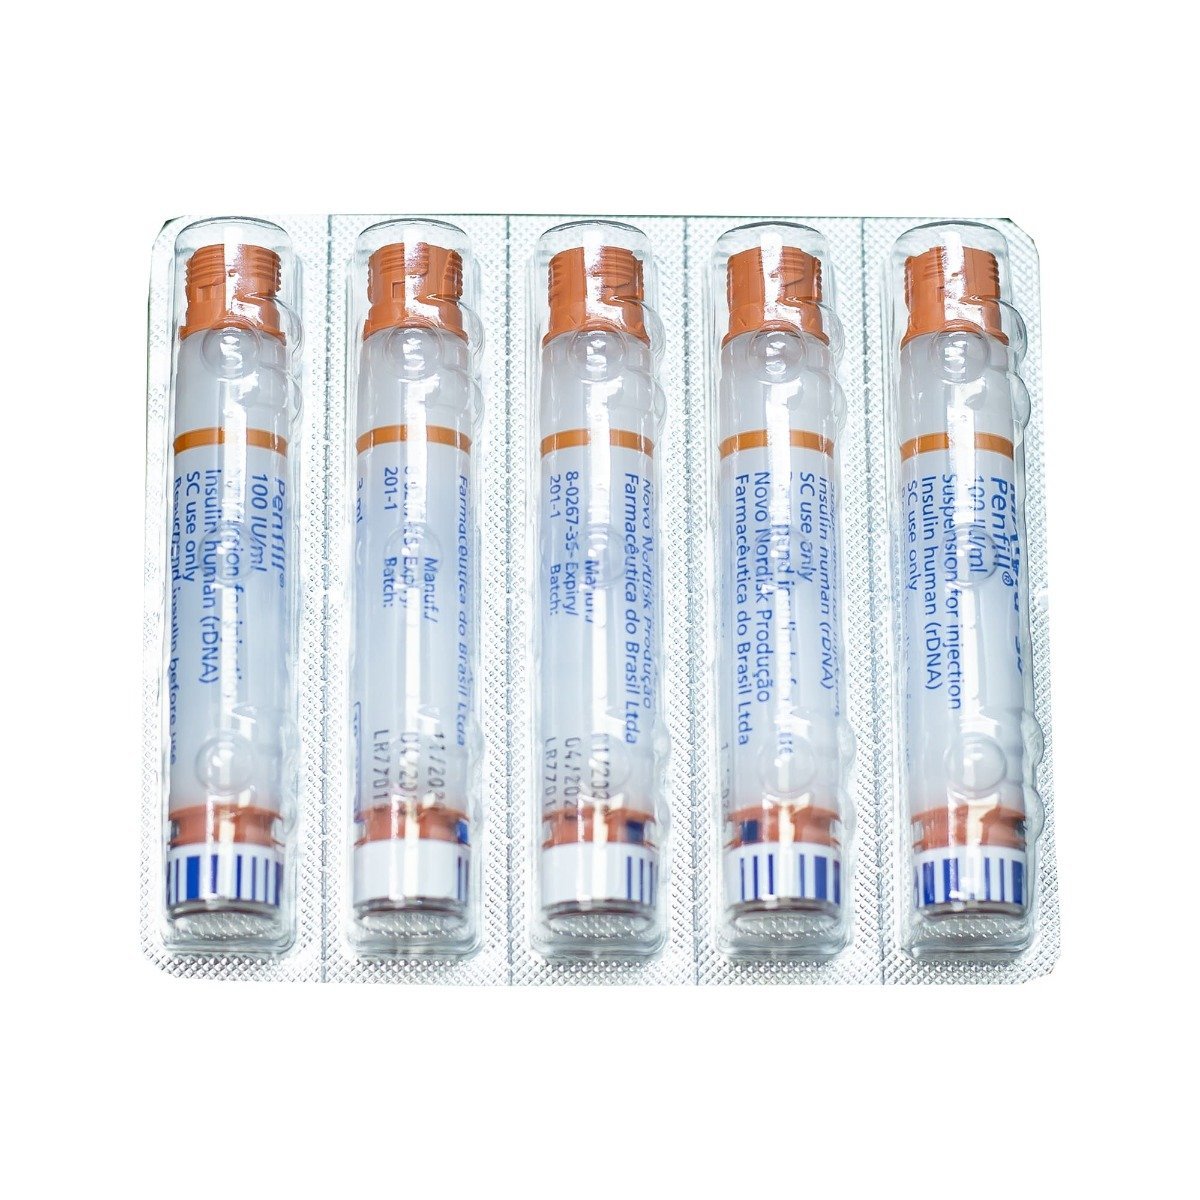 Mixtard 30 100 IU-ml 3 ml - 5 Cartridges - Bloom Pharmacy